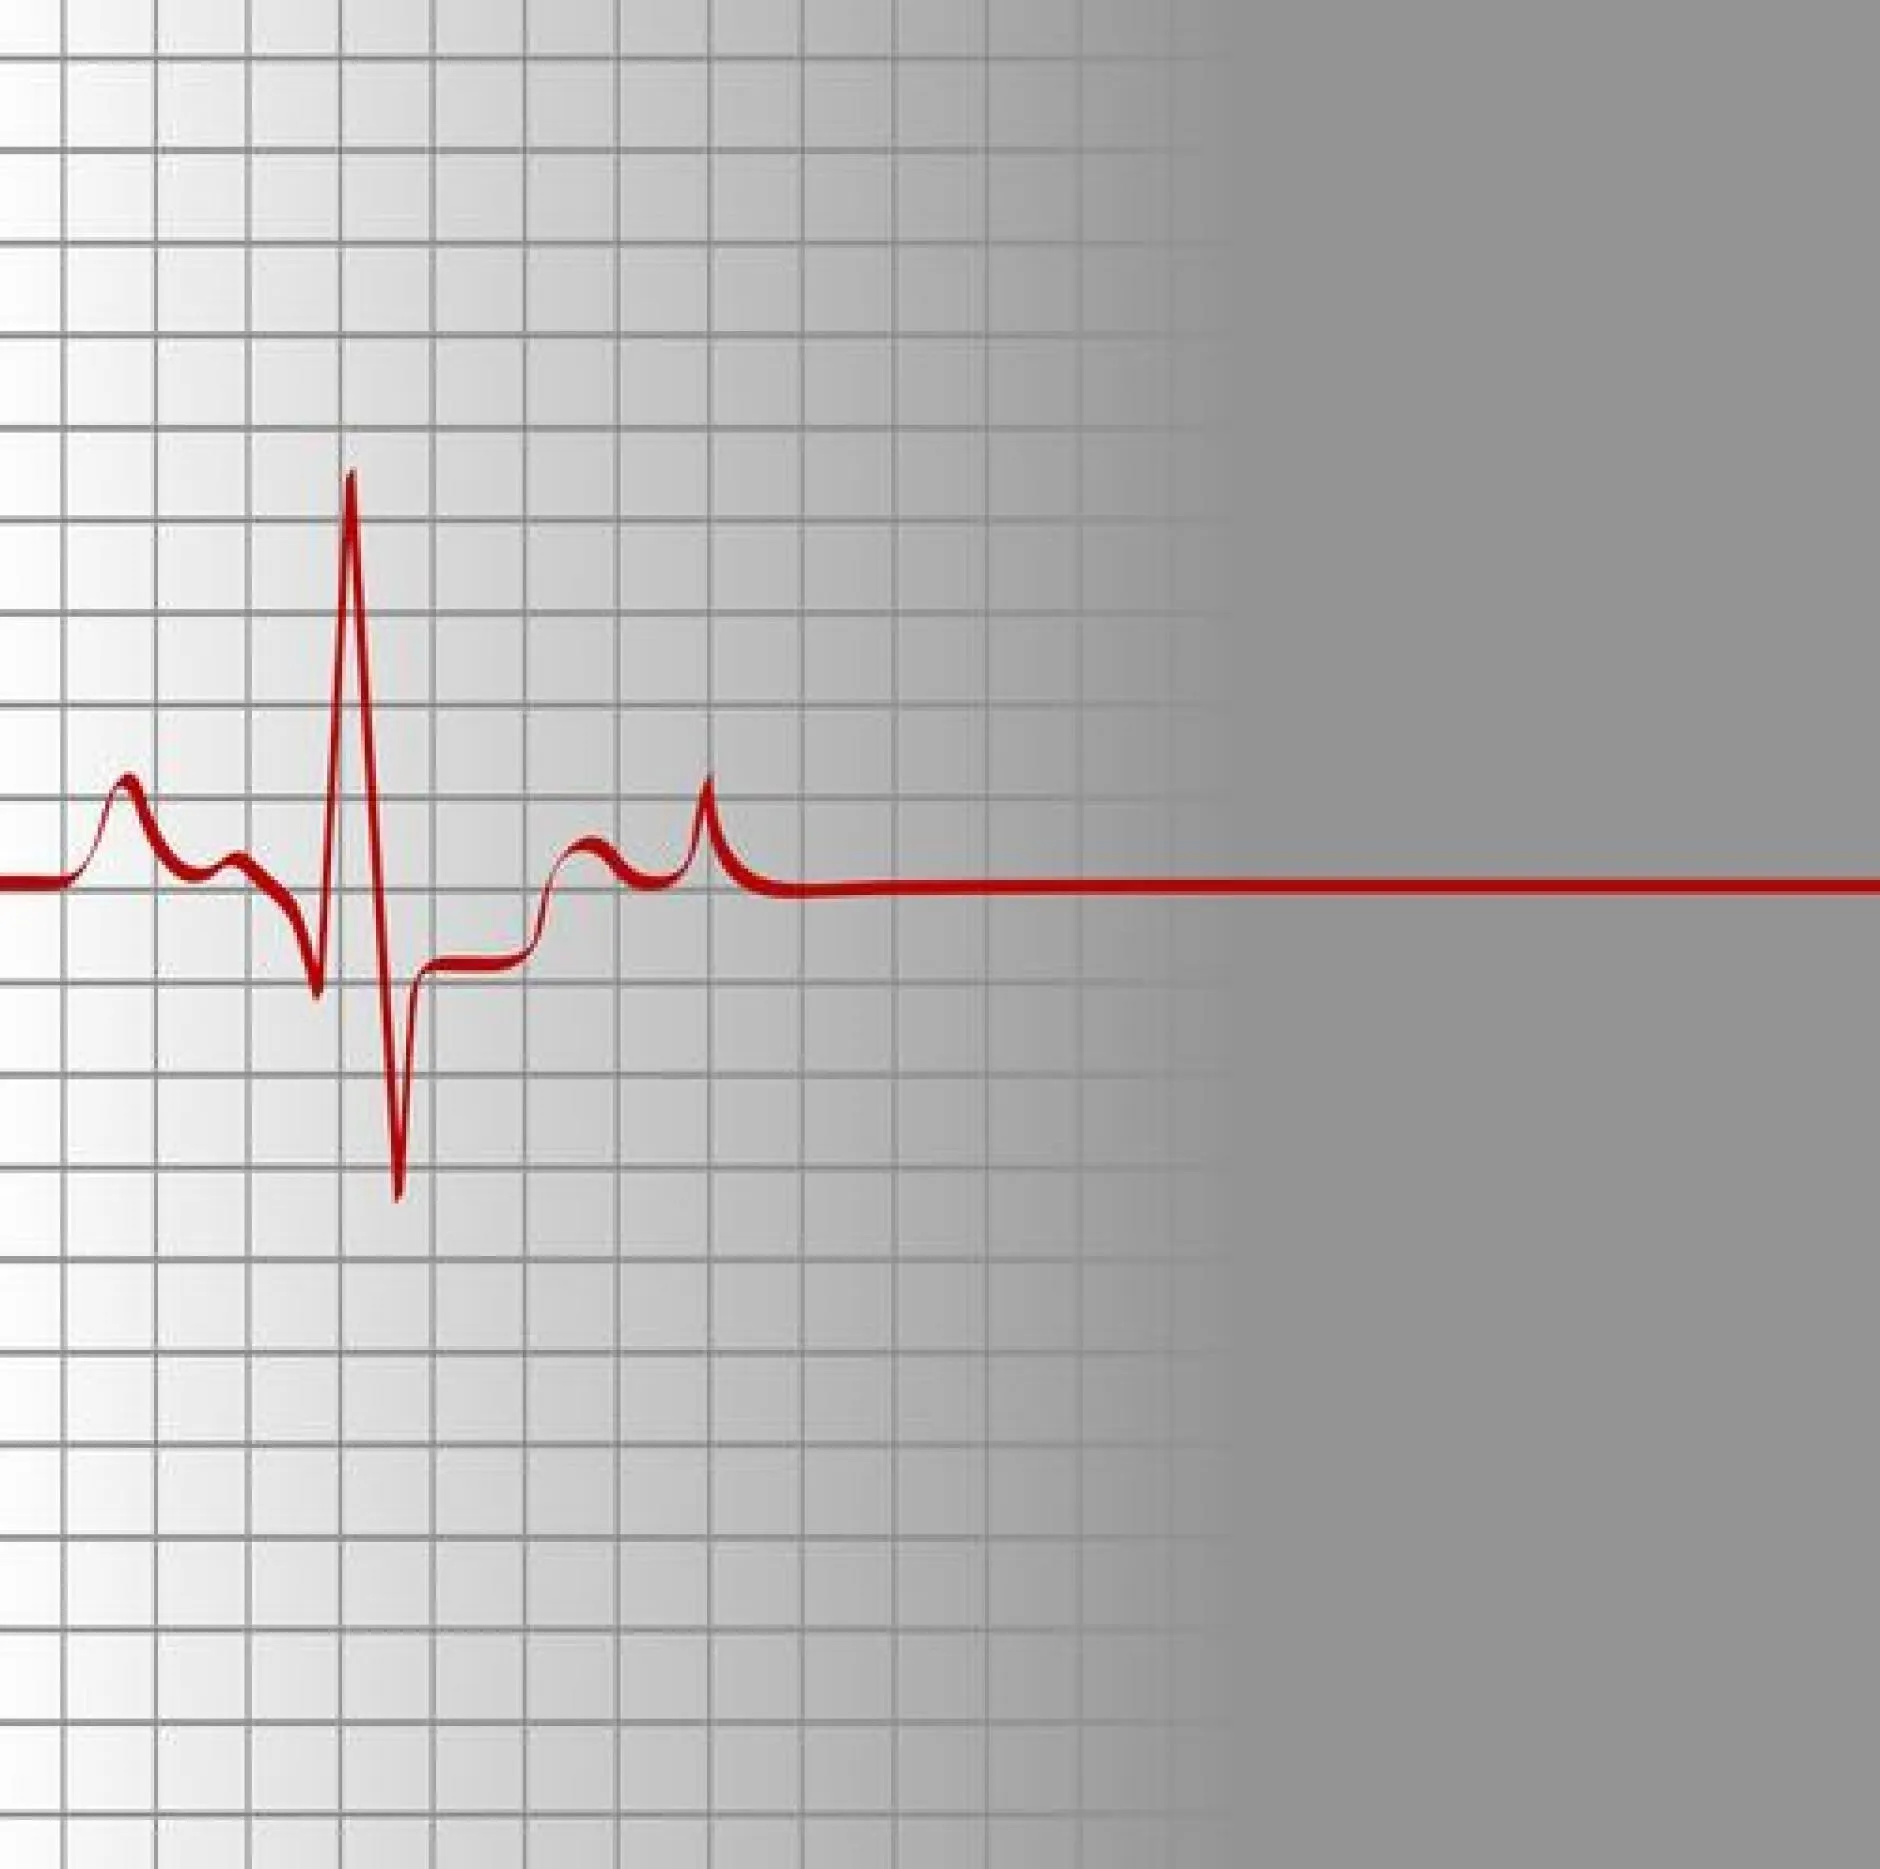 Остановка сердца на ЭКГ. Сердце с линией кардиограммы. Кардиограмма смерти. Прямая линия на кардиограмме. Сердцебиение остановилось